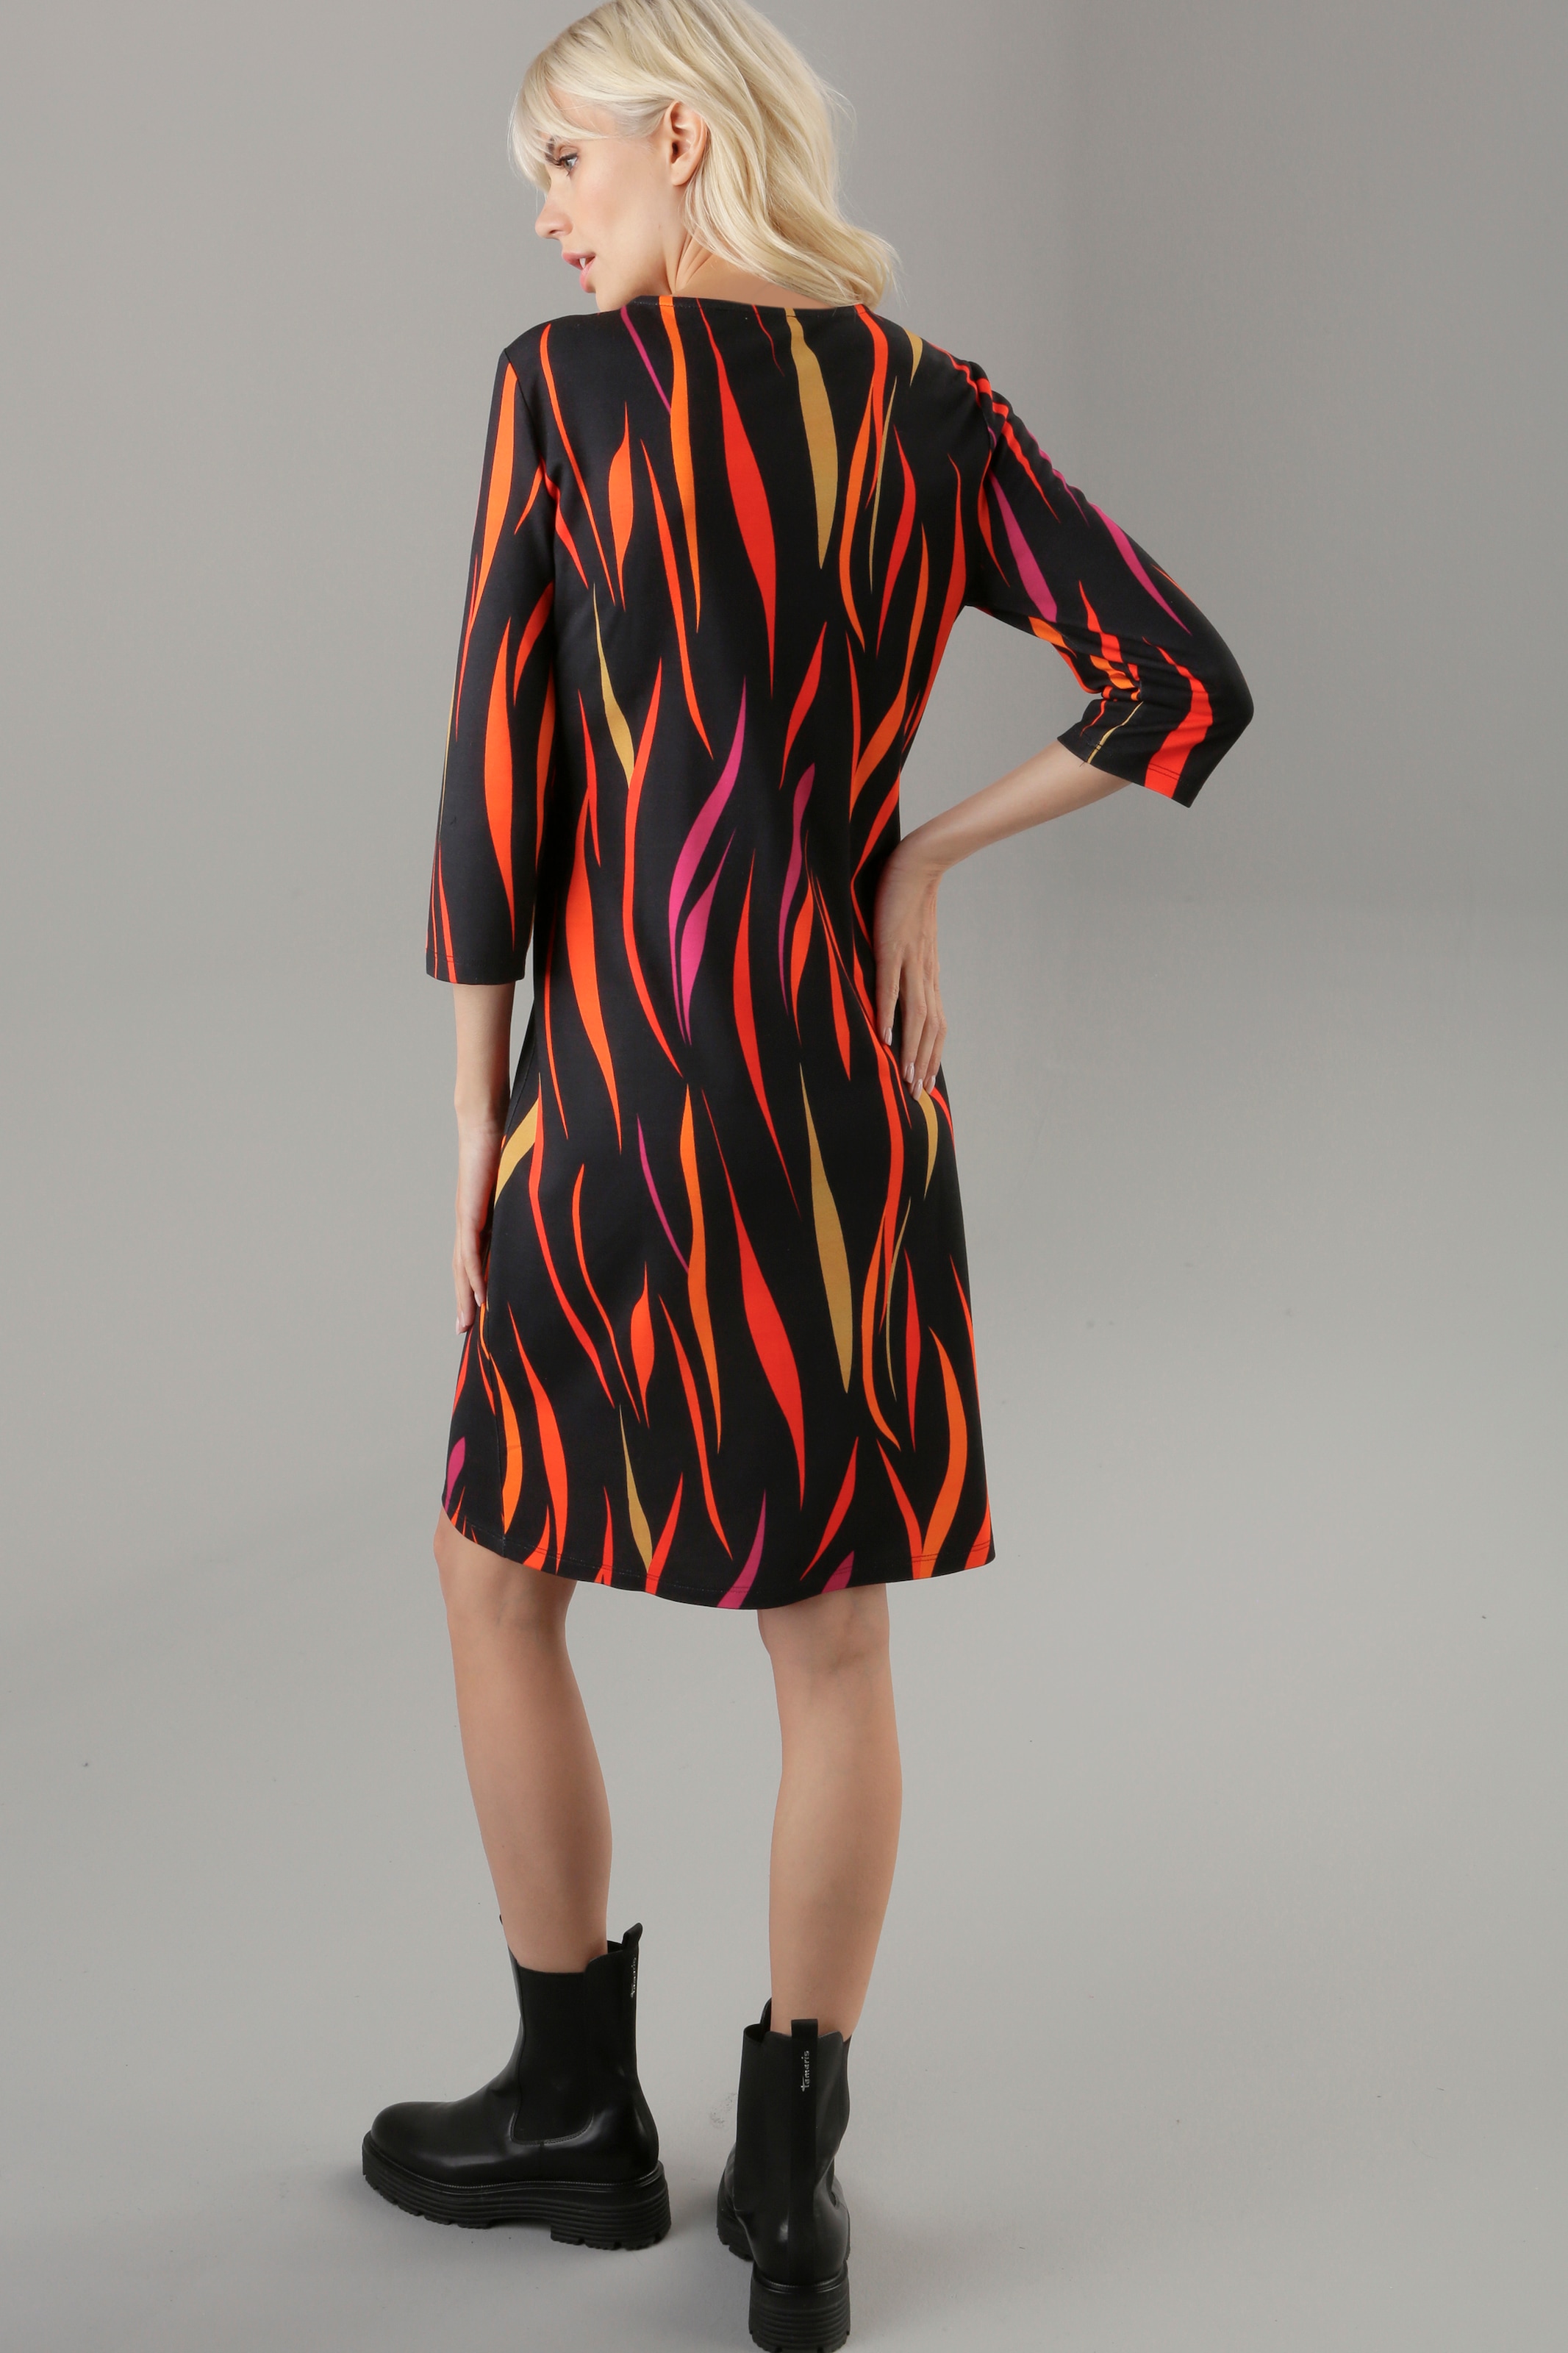 Aniston SELECTED Jerseykleid, mit Allover-Druck in Knallfarben kaufen | I'm  walking